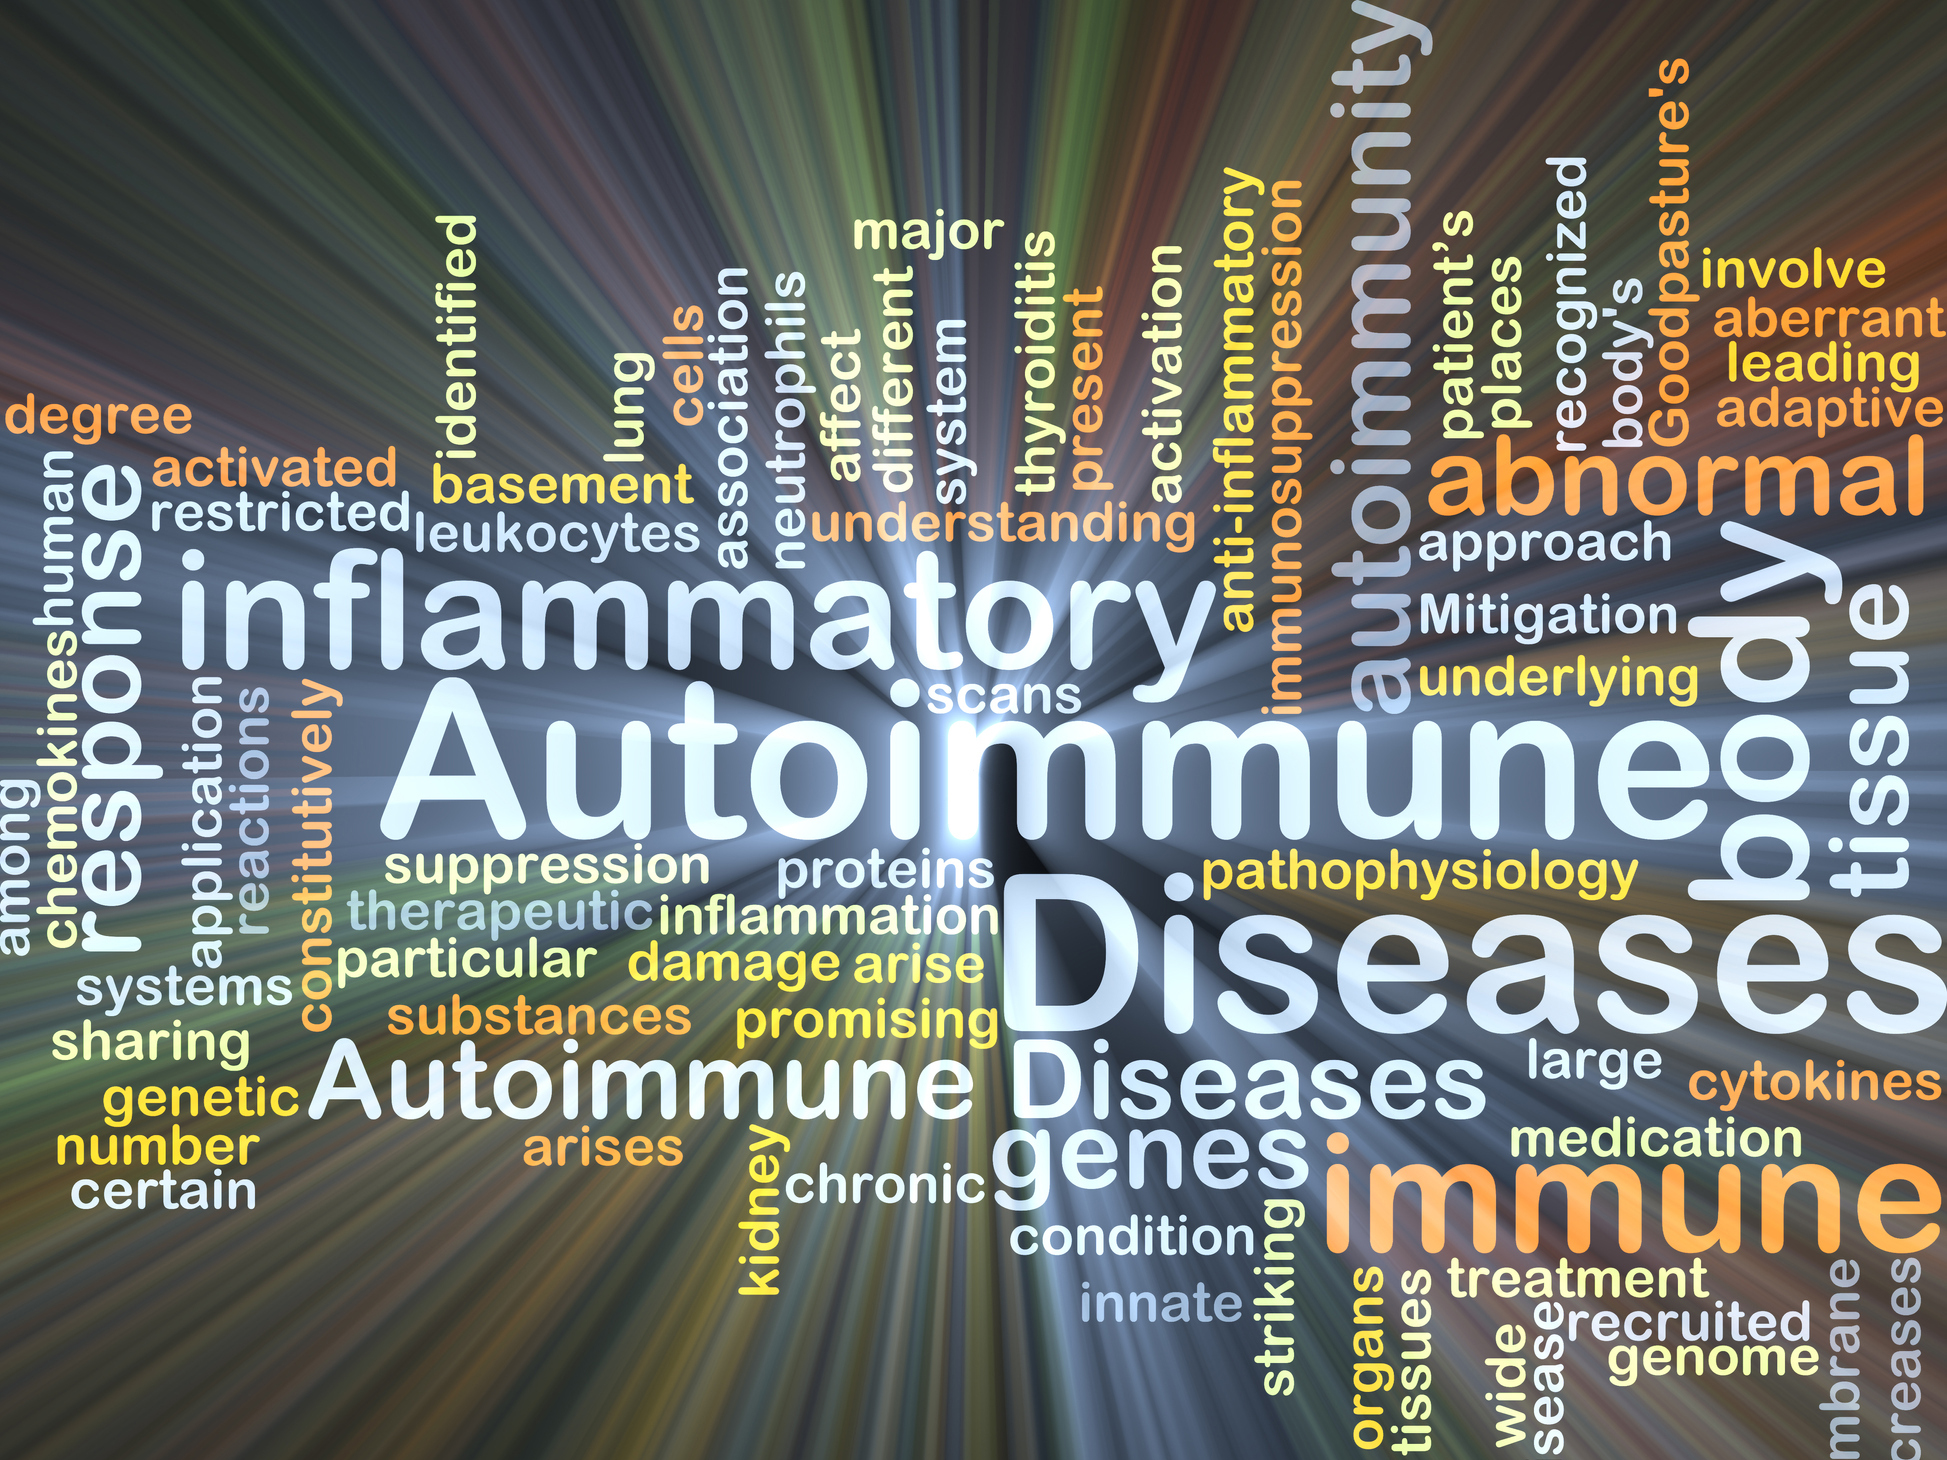 The best nutrient for fighting autoimmune disease